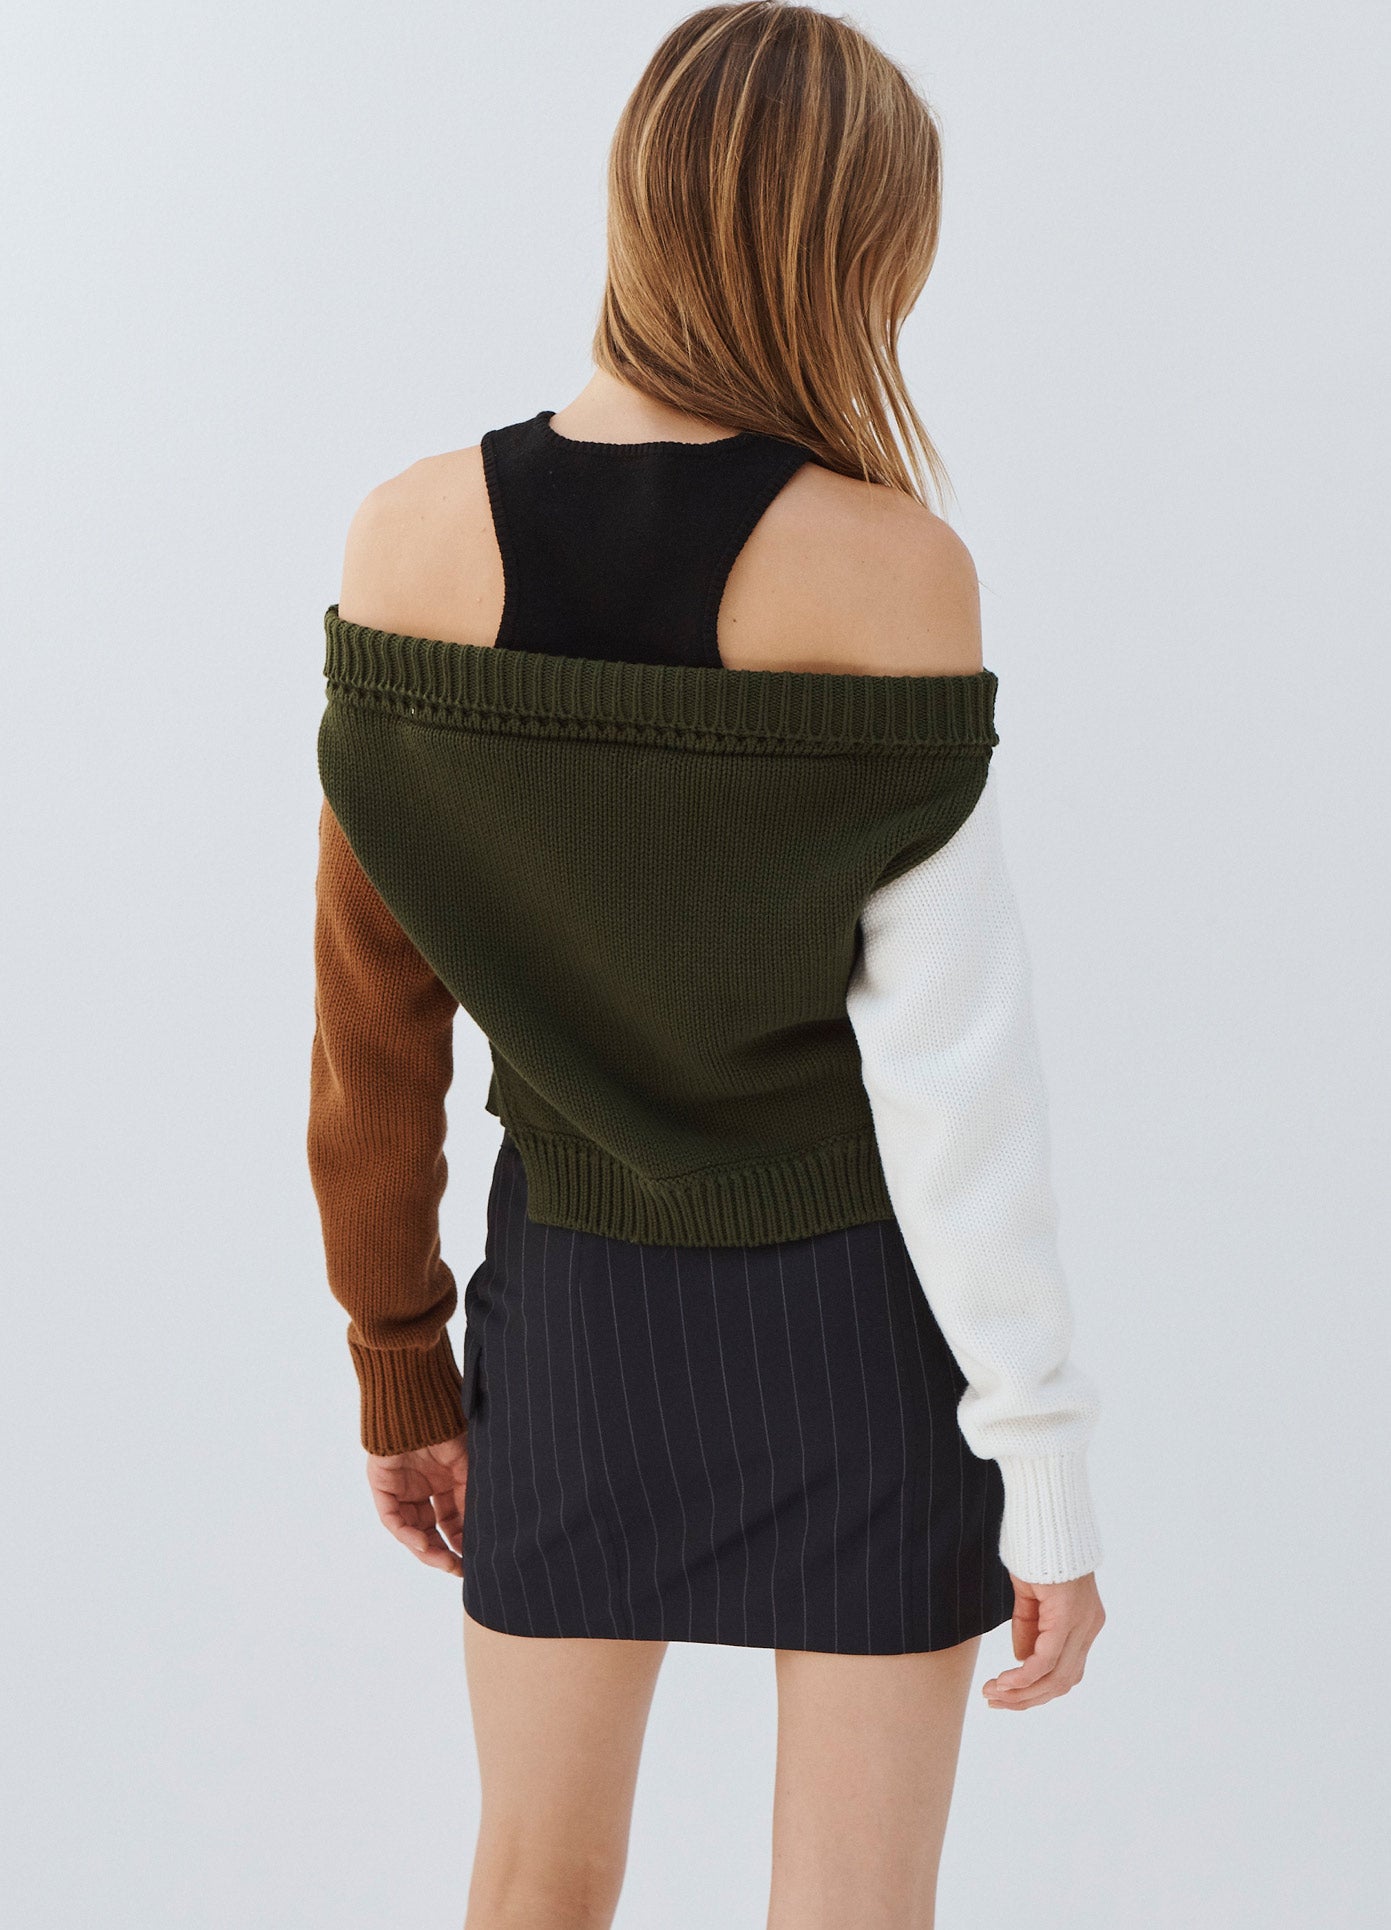 MONSE Color Blocked Off Shoulder Sweater in Olive on Model Back View